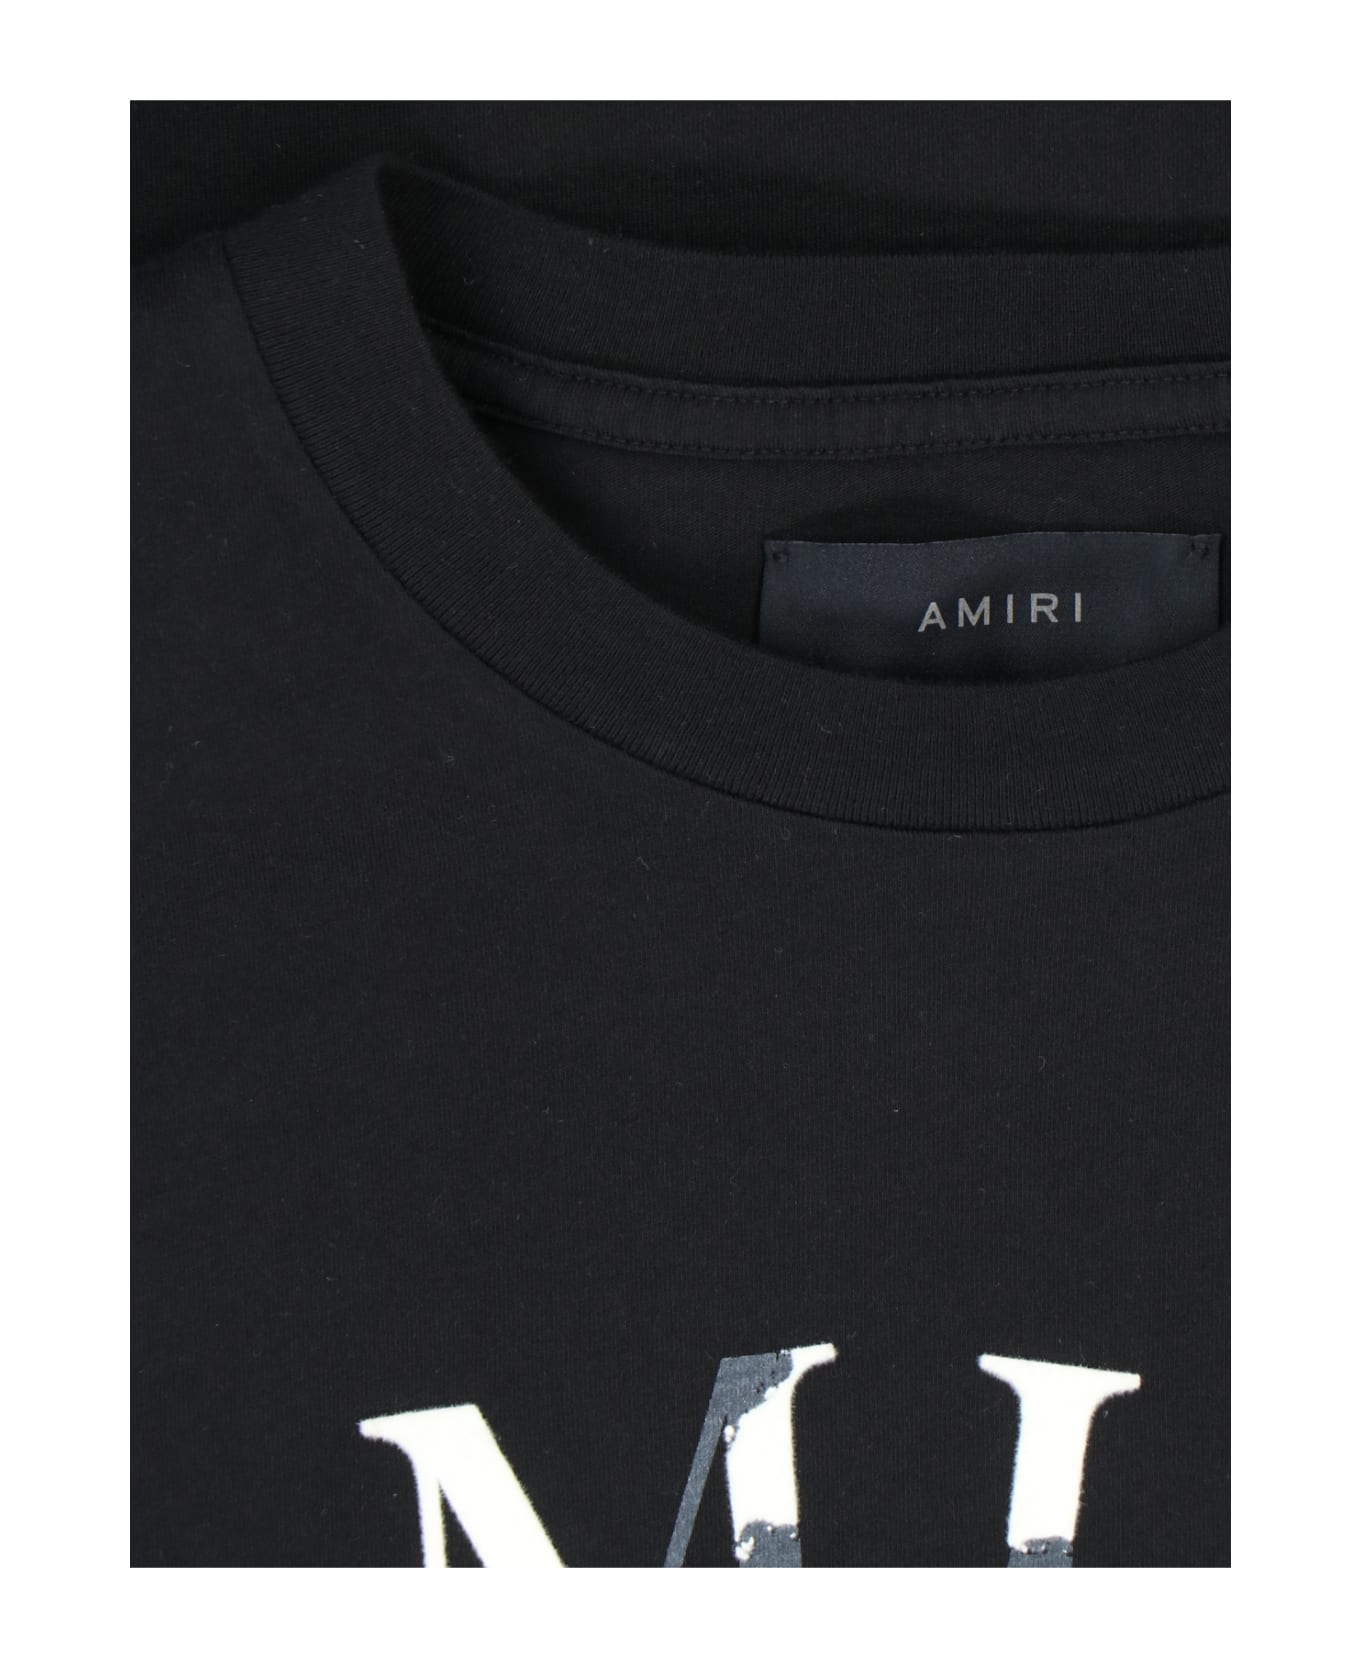 AMIRI Printed T-shirt - Black  